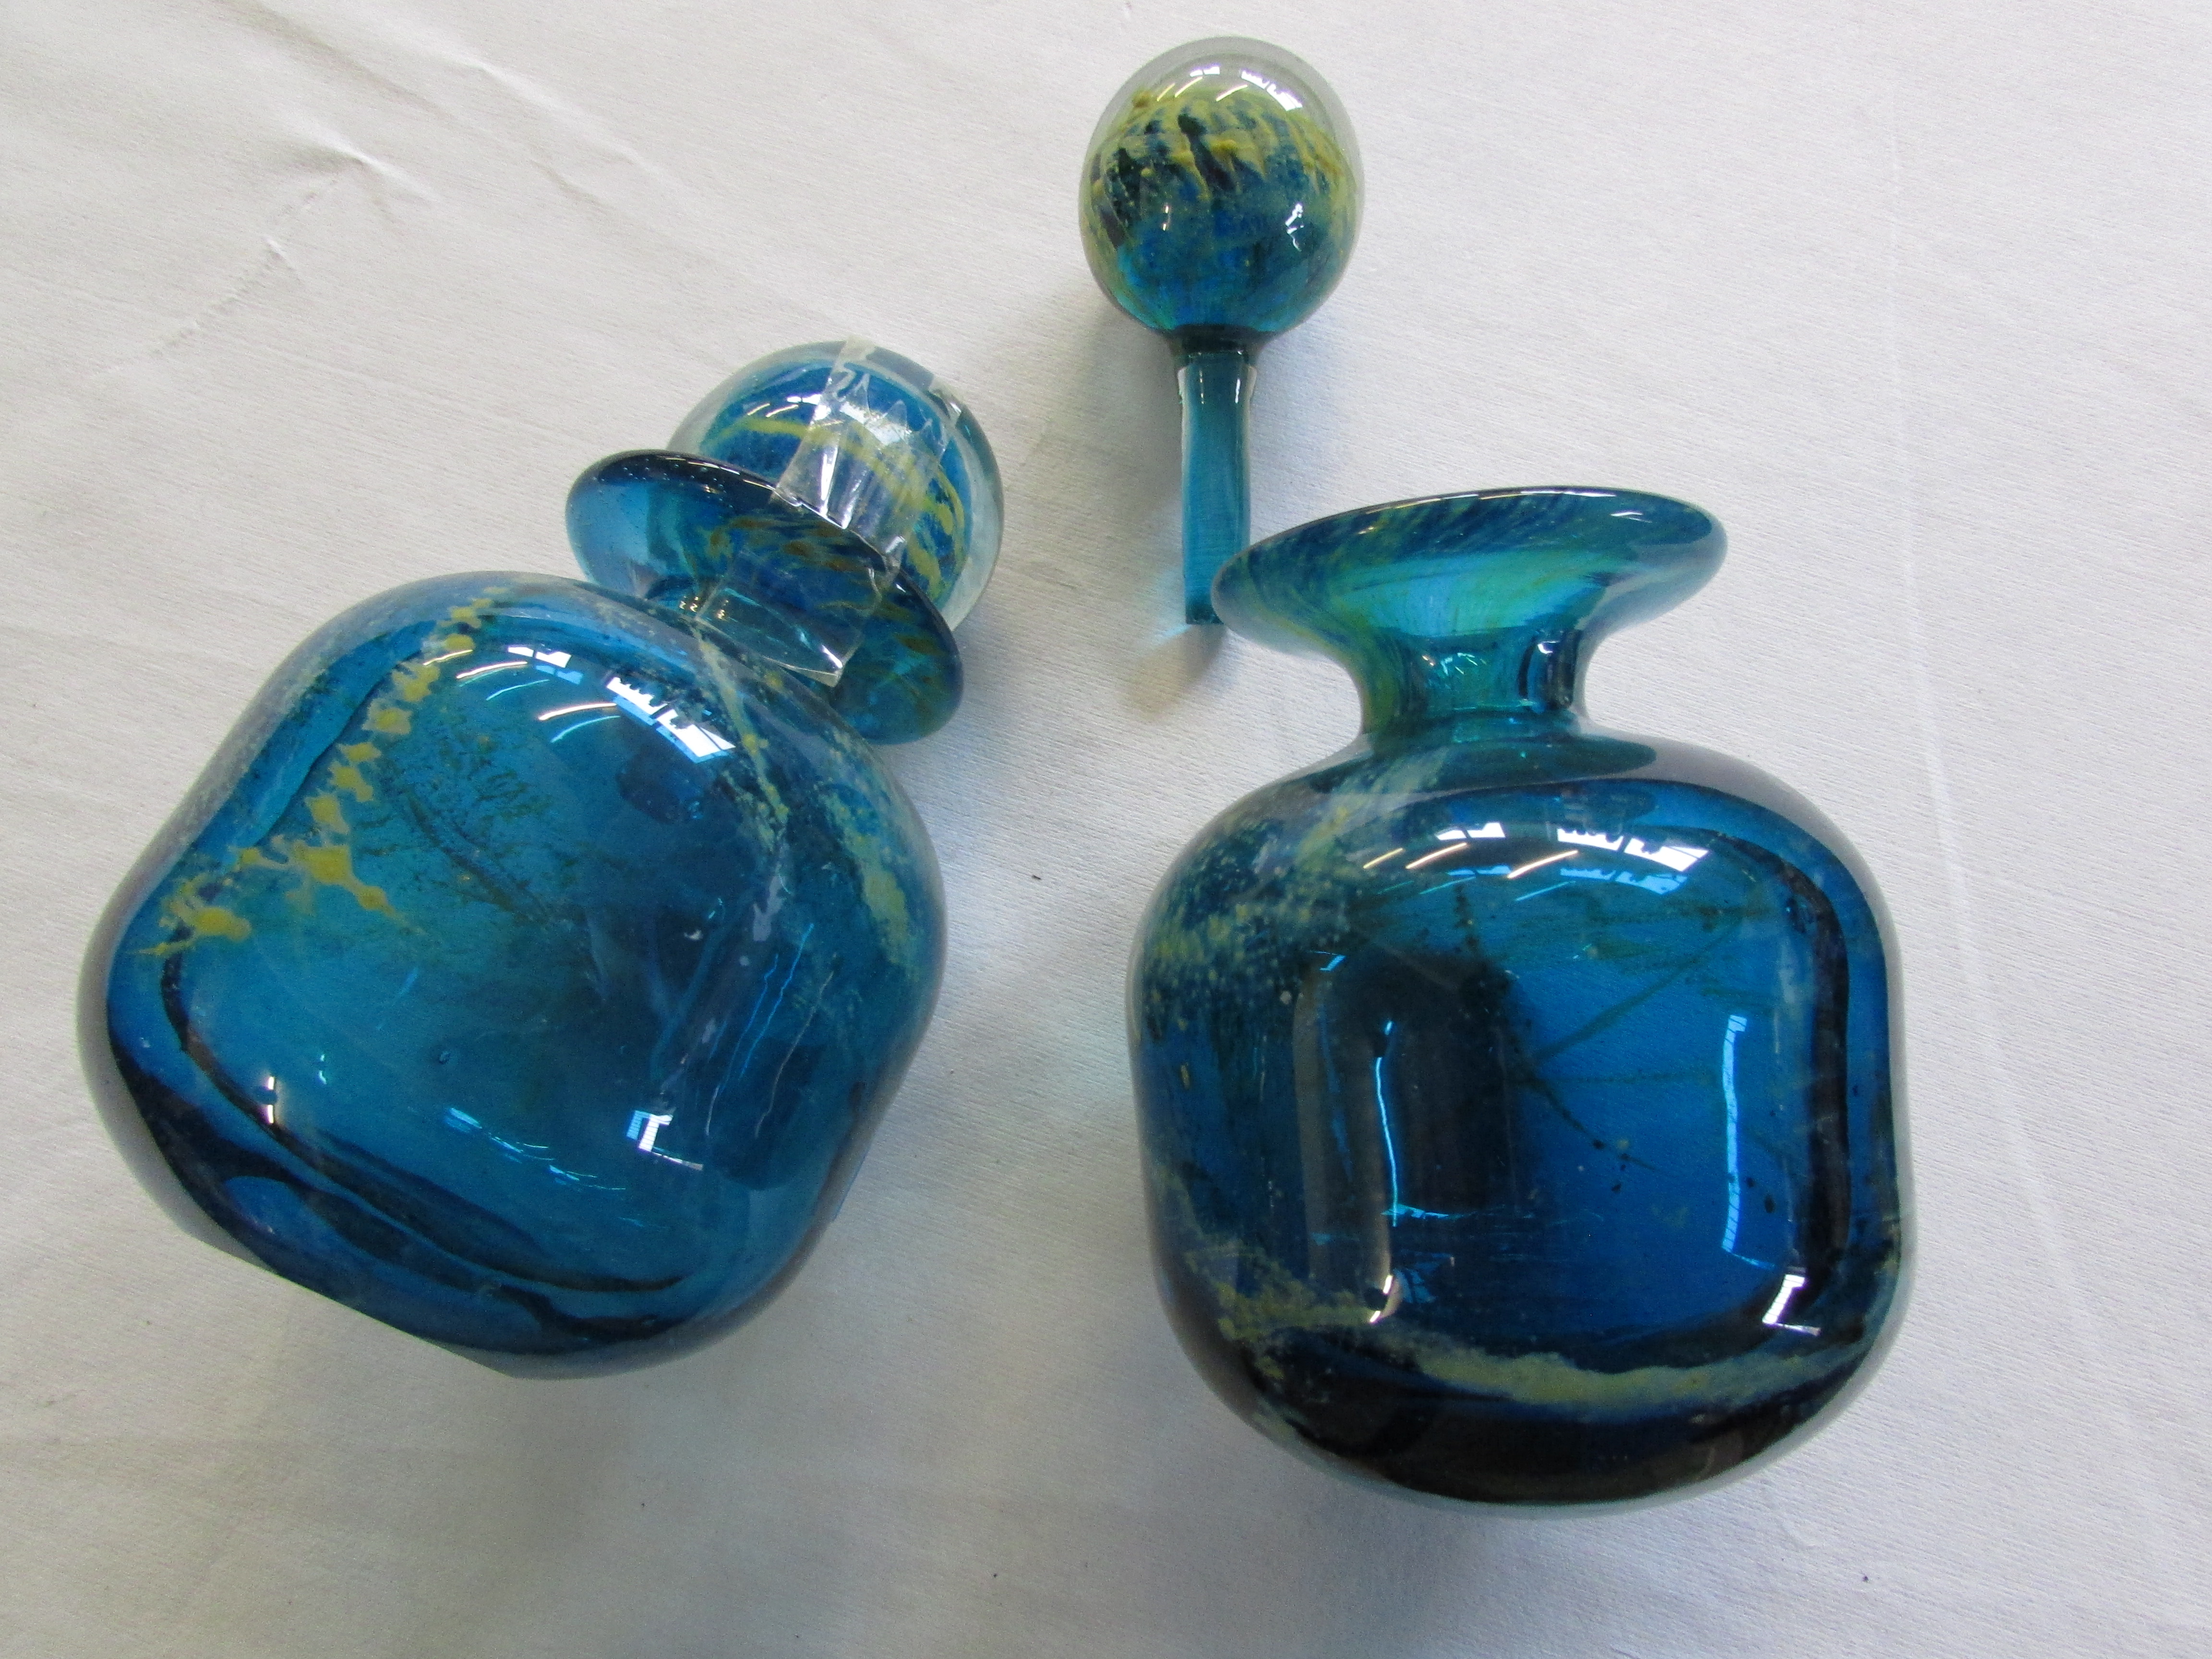 Pair of Medina scent bottles, blue.